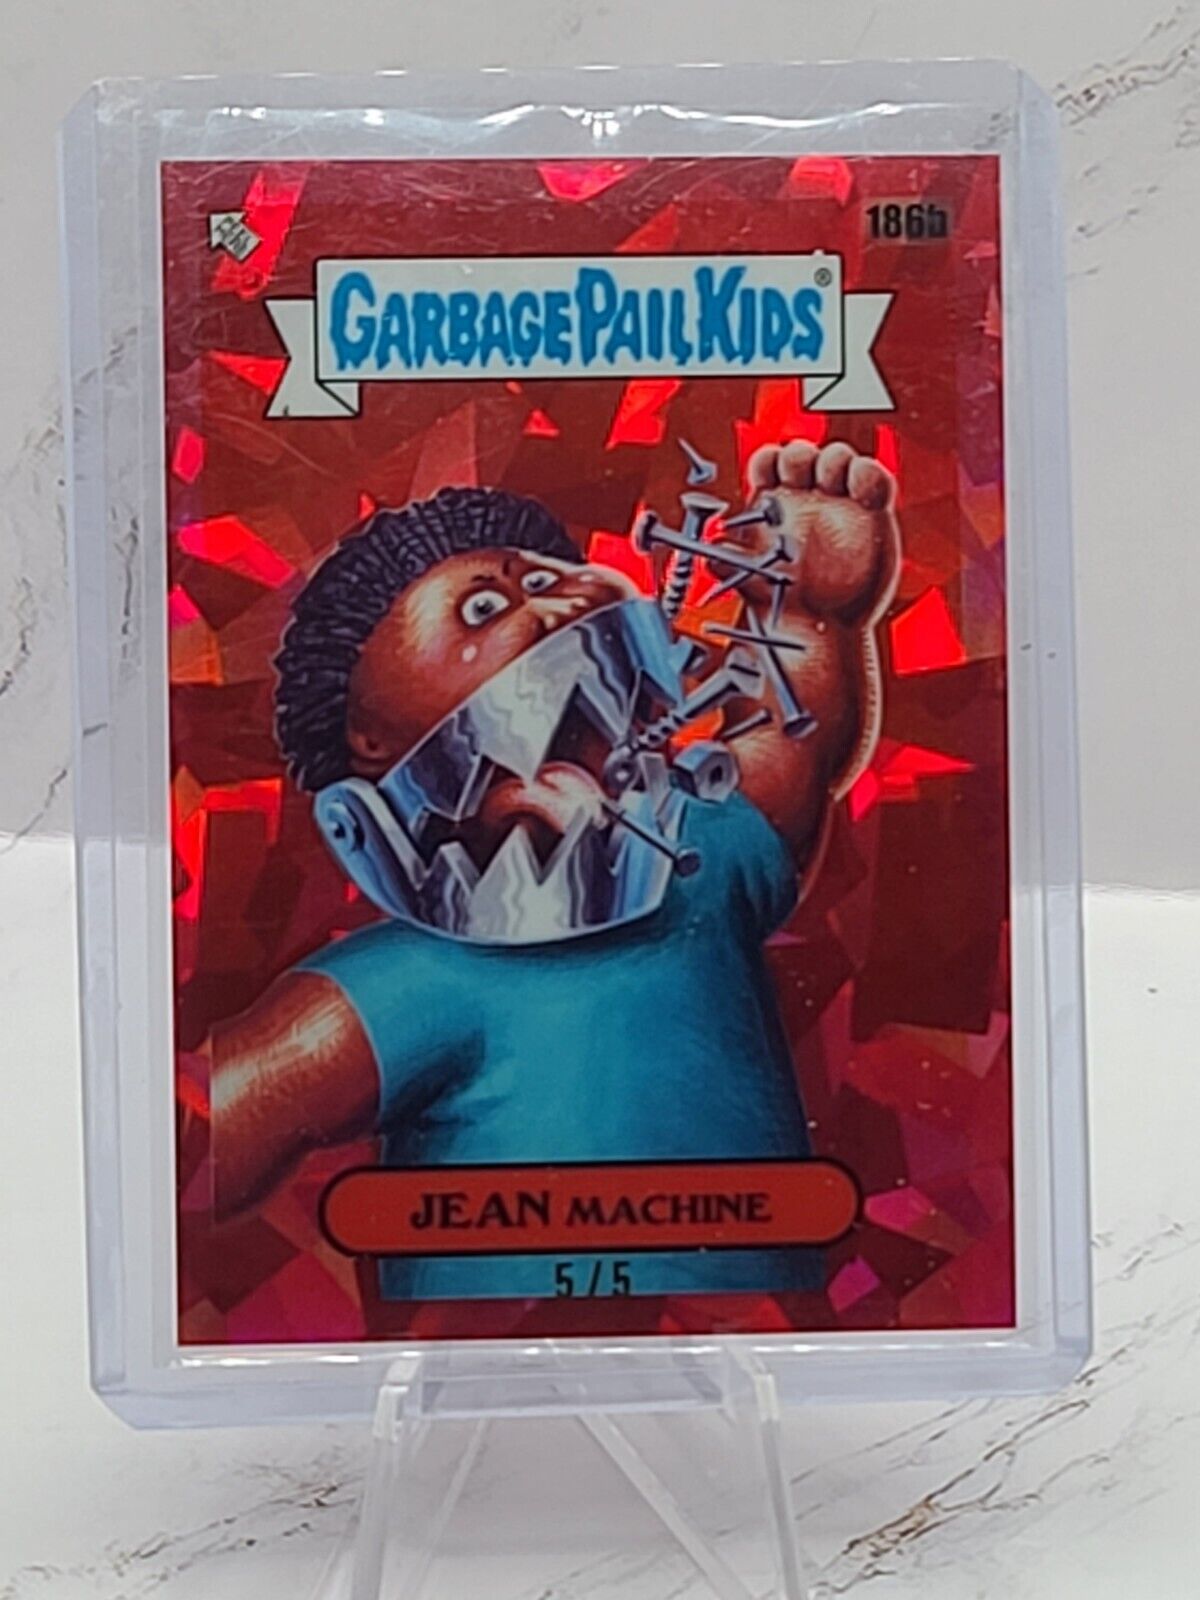 2022 Garbage Pail Kids Sapphire - JEAN MACHINE #186B - Red Numbered 5/5 GPK MINT